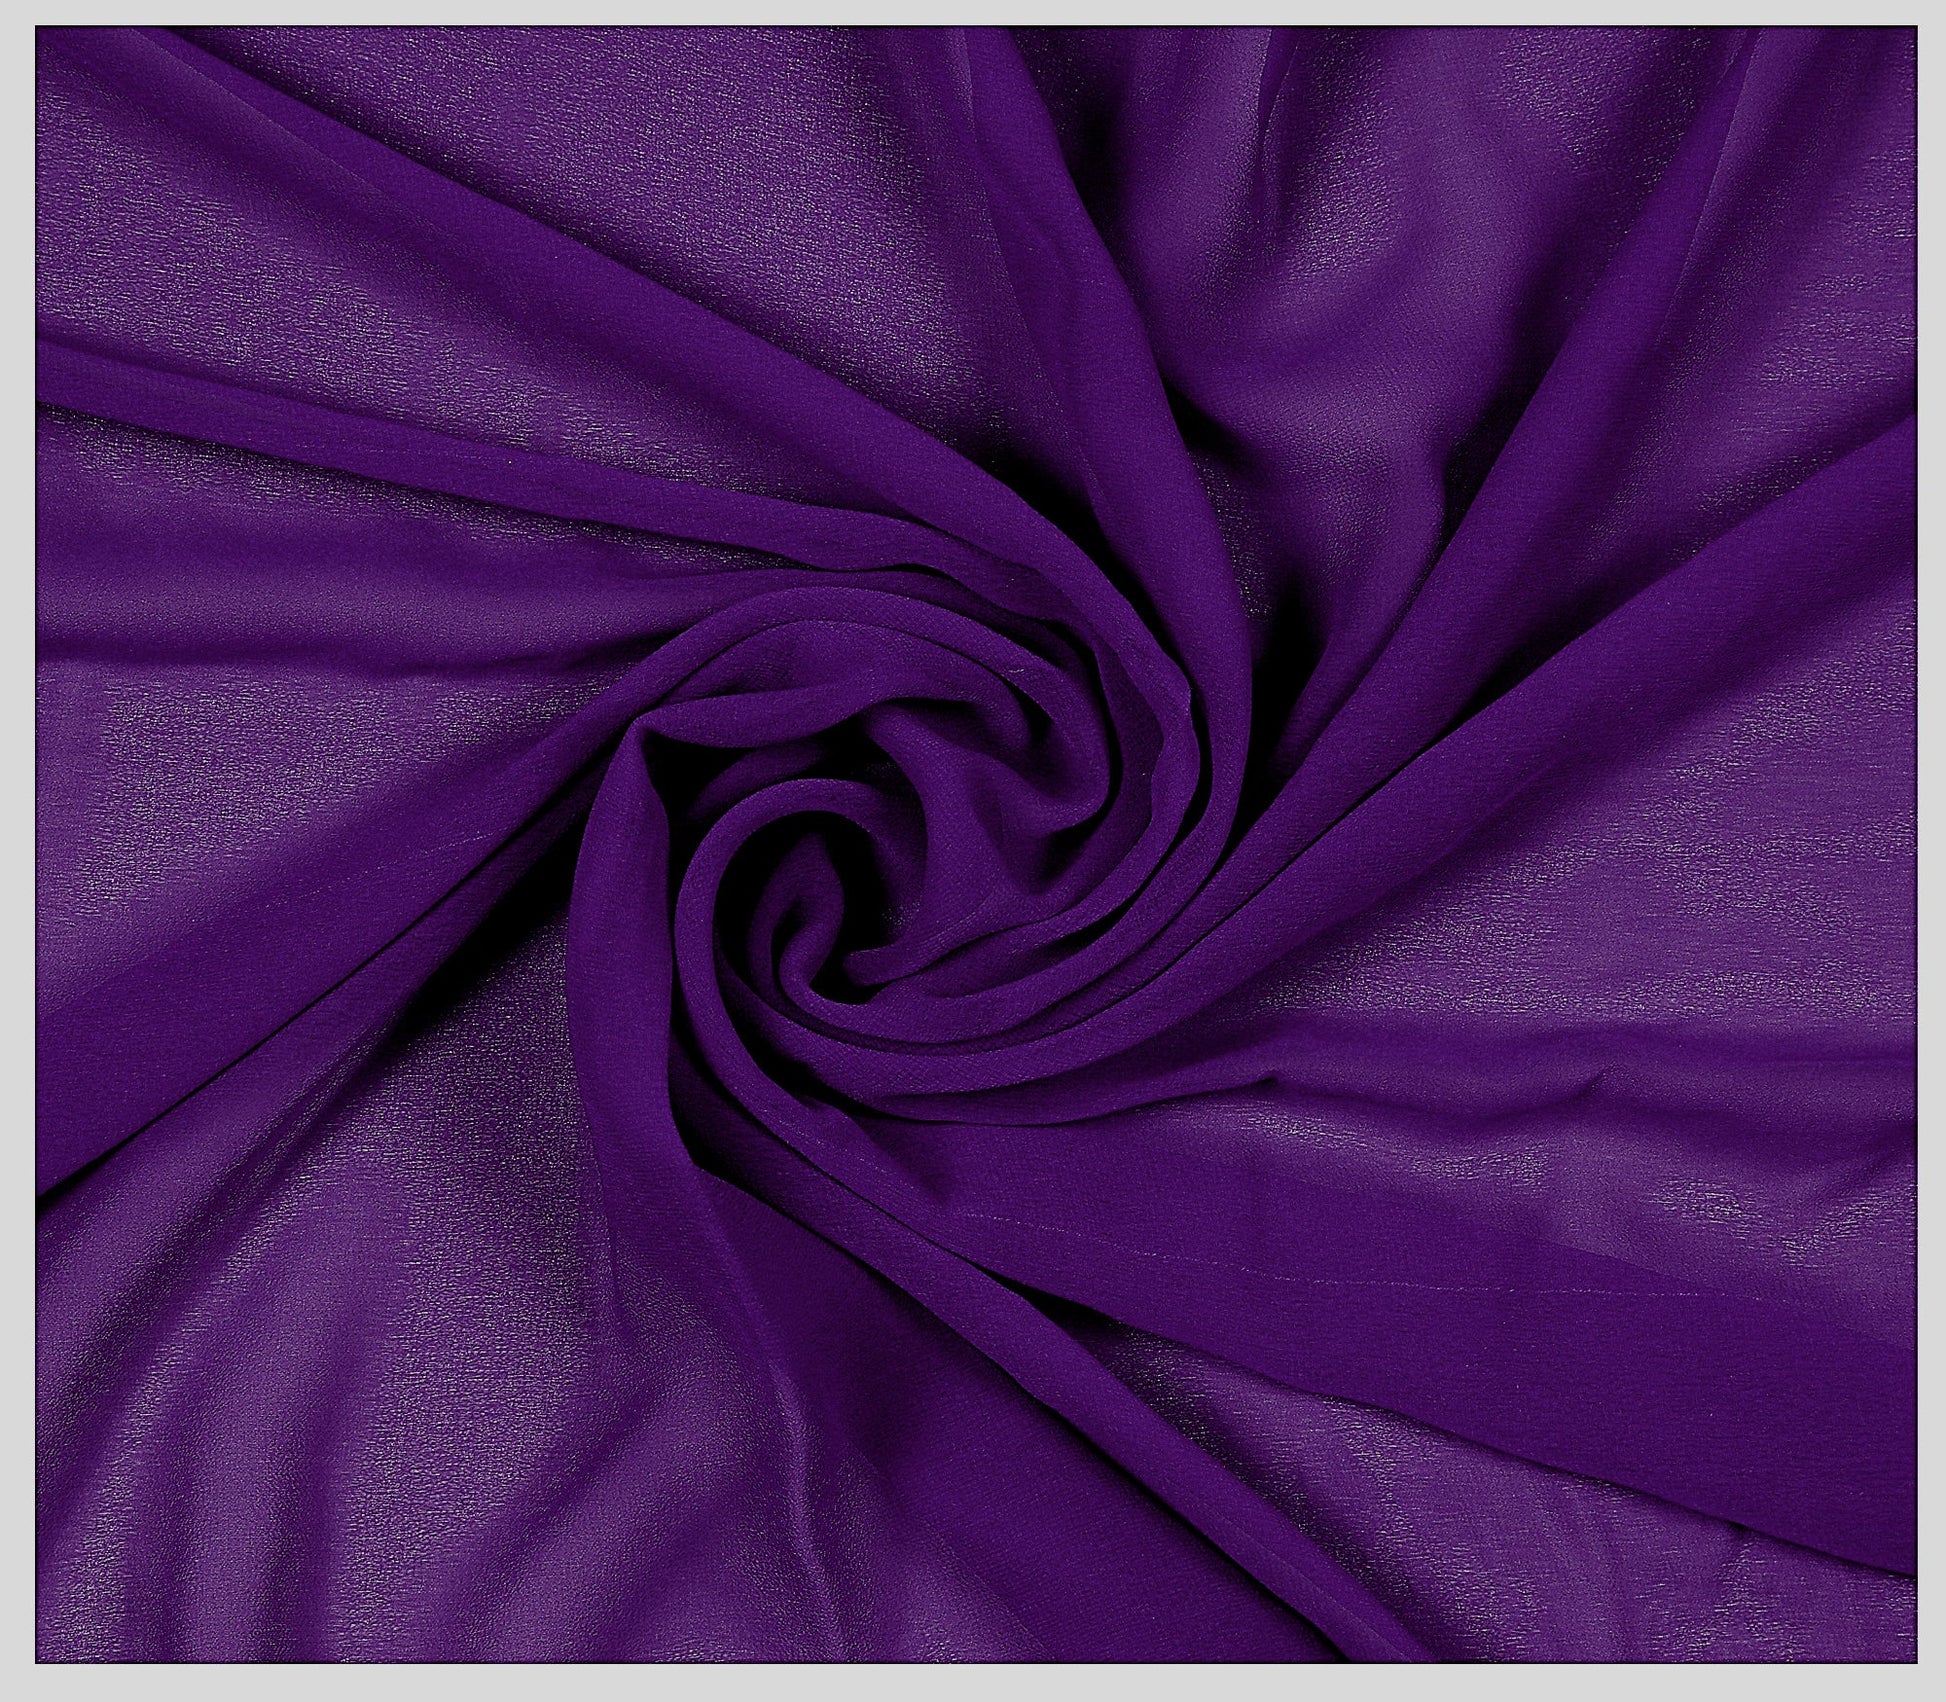 Cadbury Purple,c2decfc3-f9d0-436f-ae1e-a03bee25e530